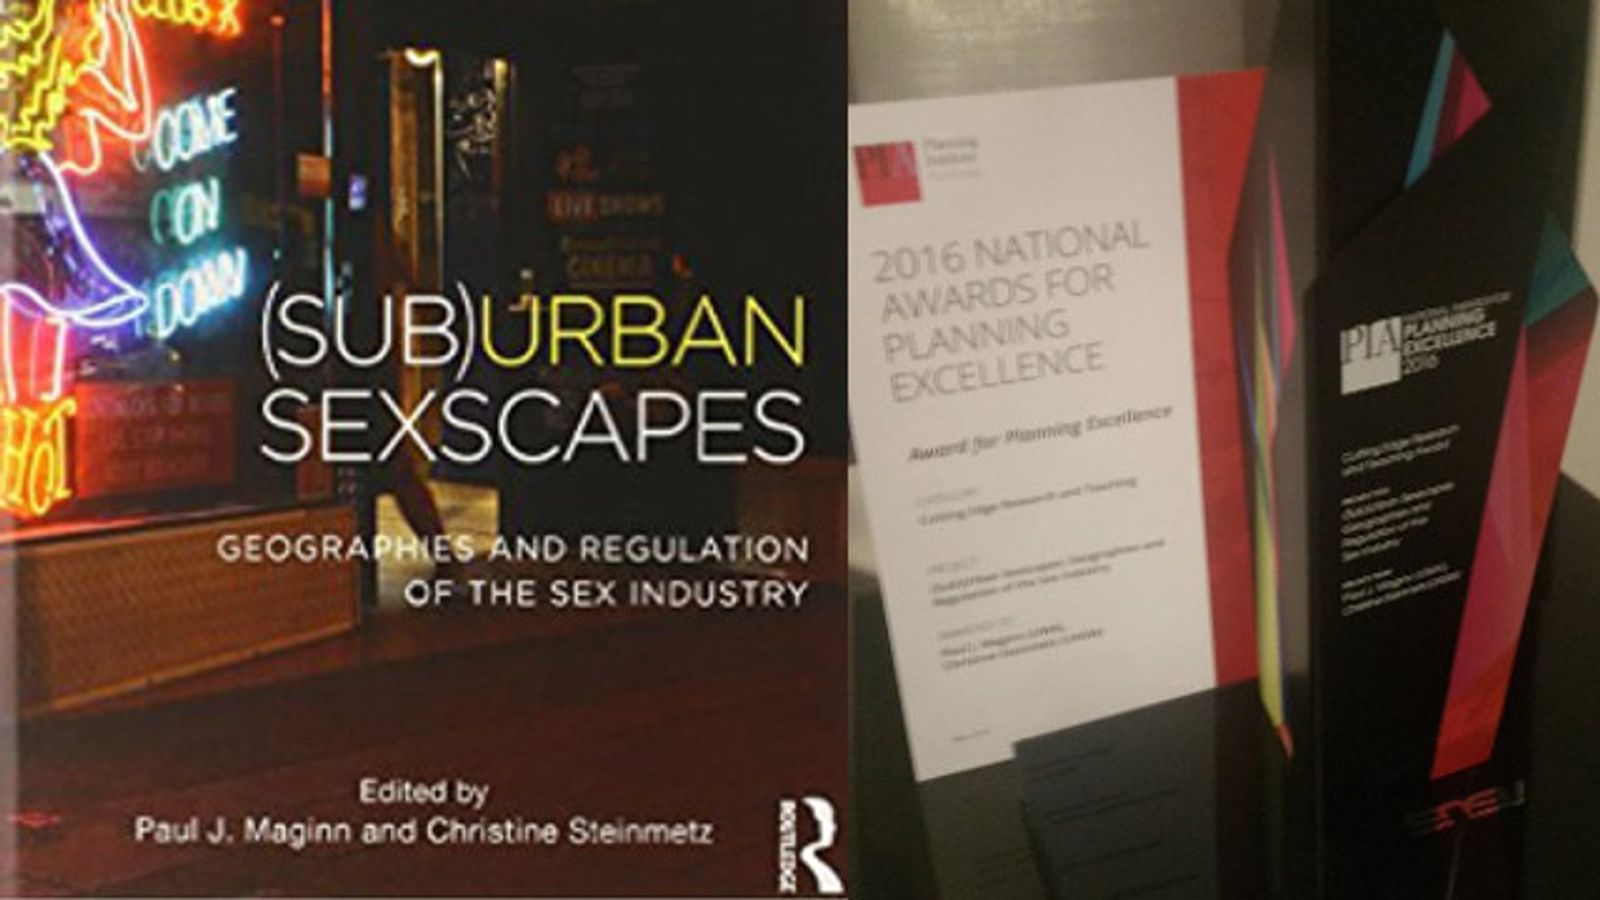 'Suburban Sexscapes' Wins National Planning Award